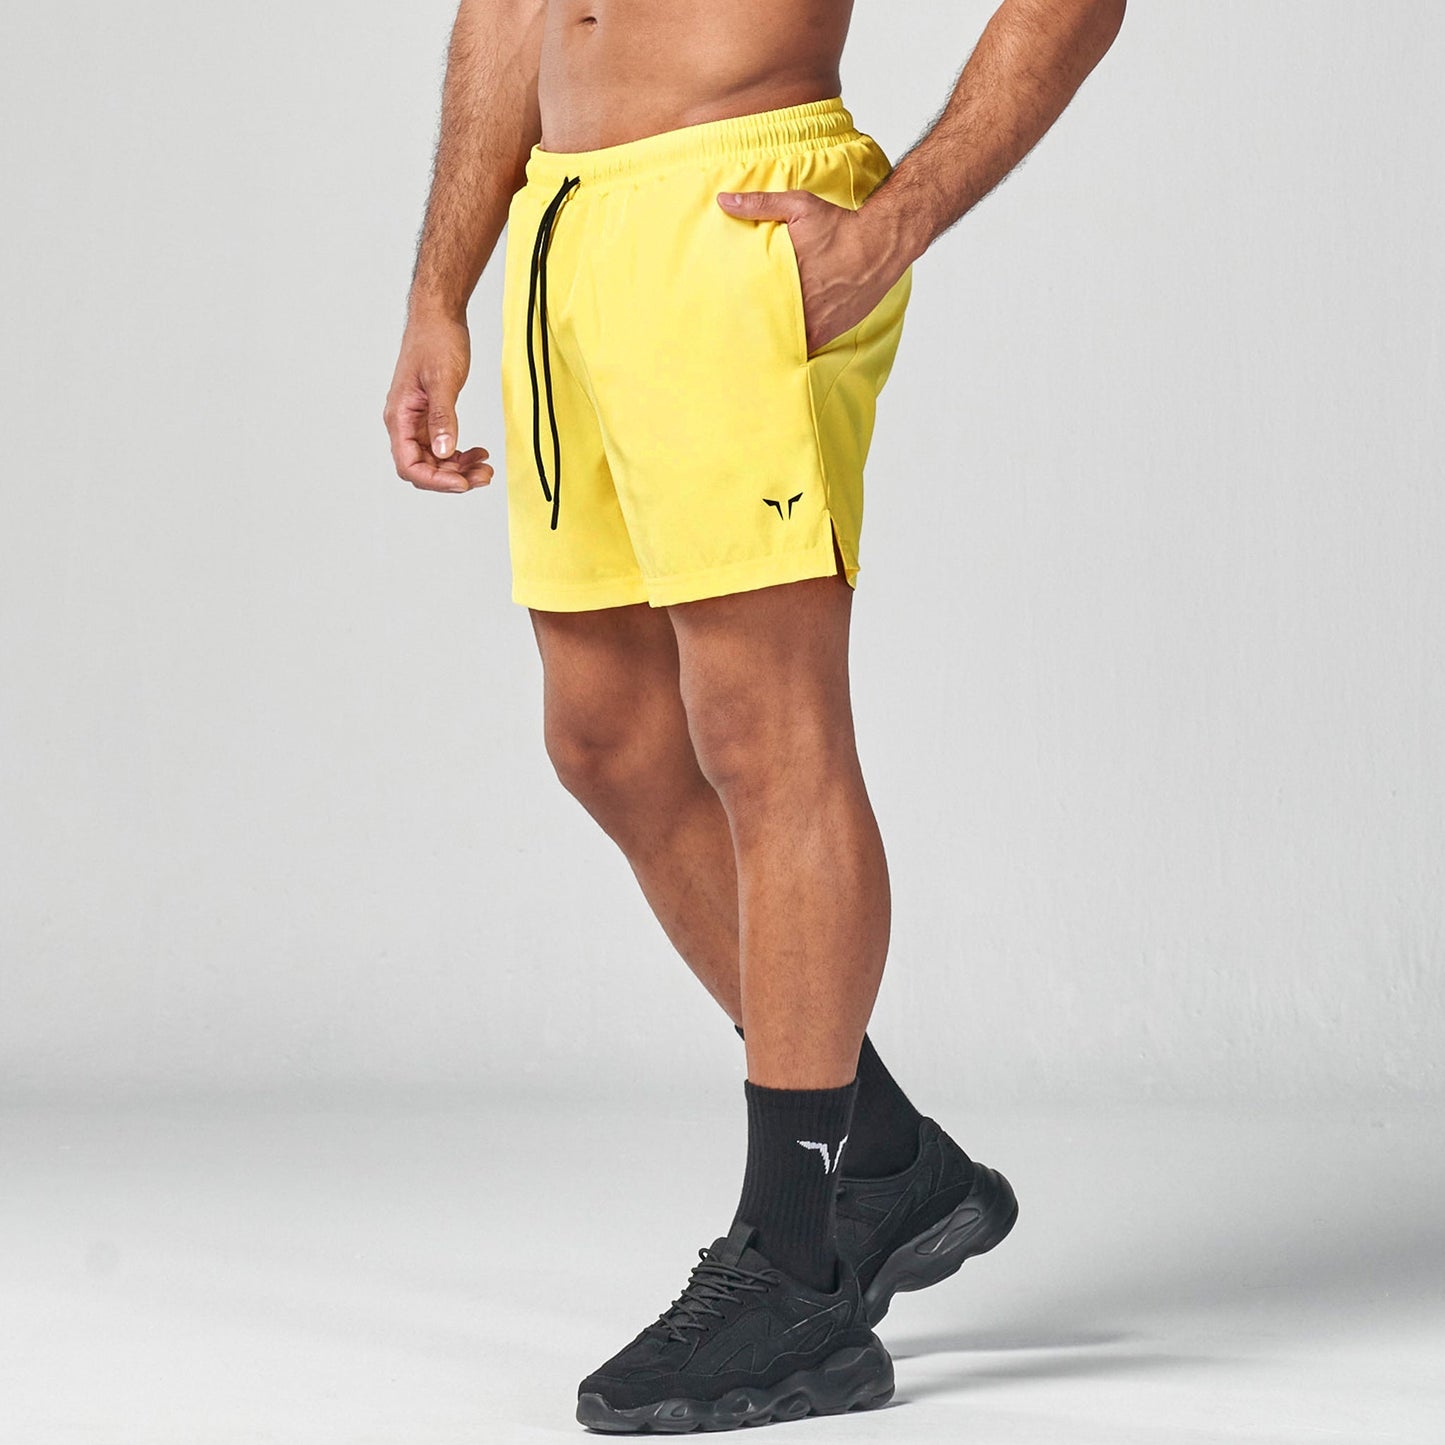 squatwolf-gym-wear-essential-5-inch-shorts-bundle-workout-short-for-men